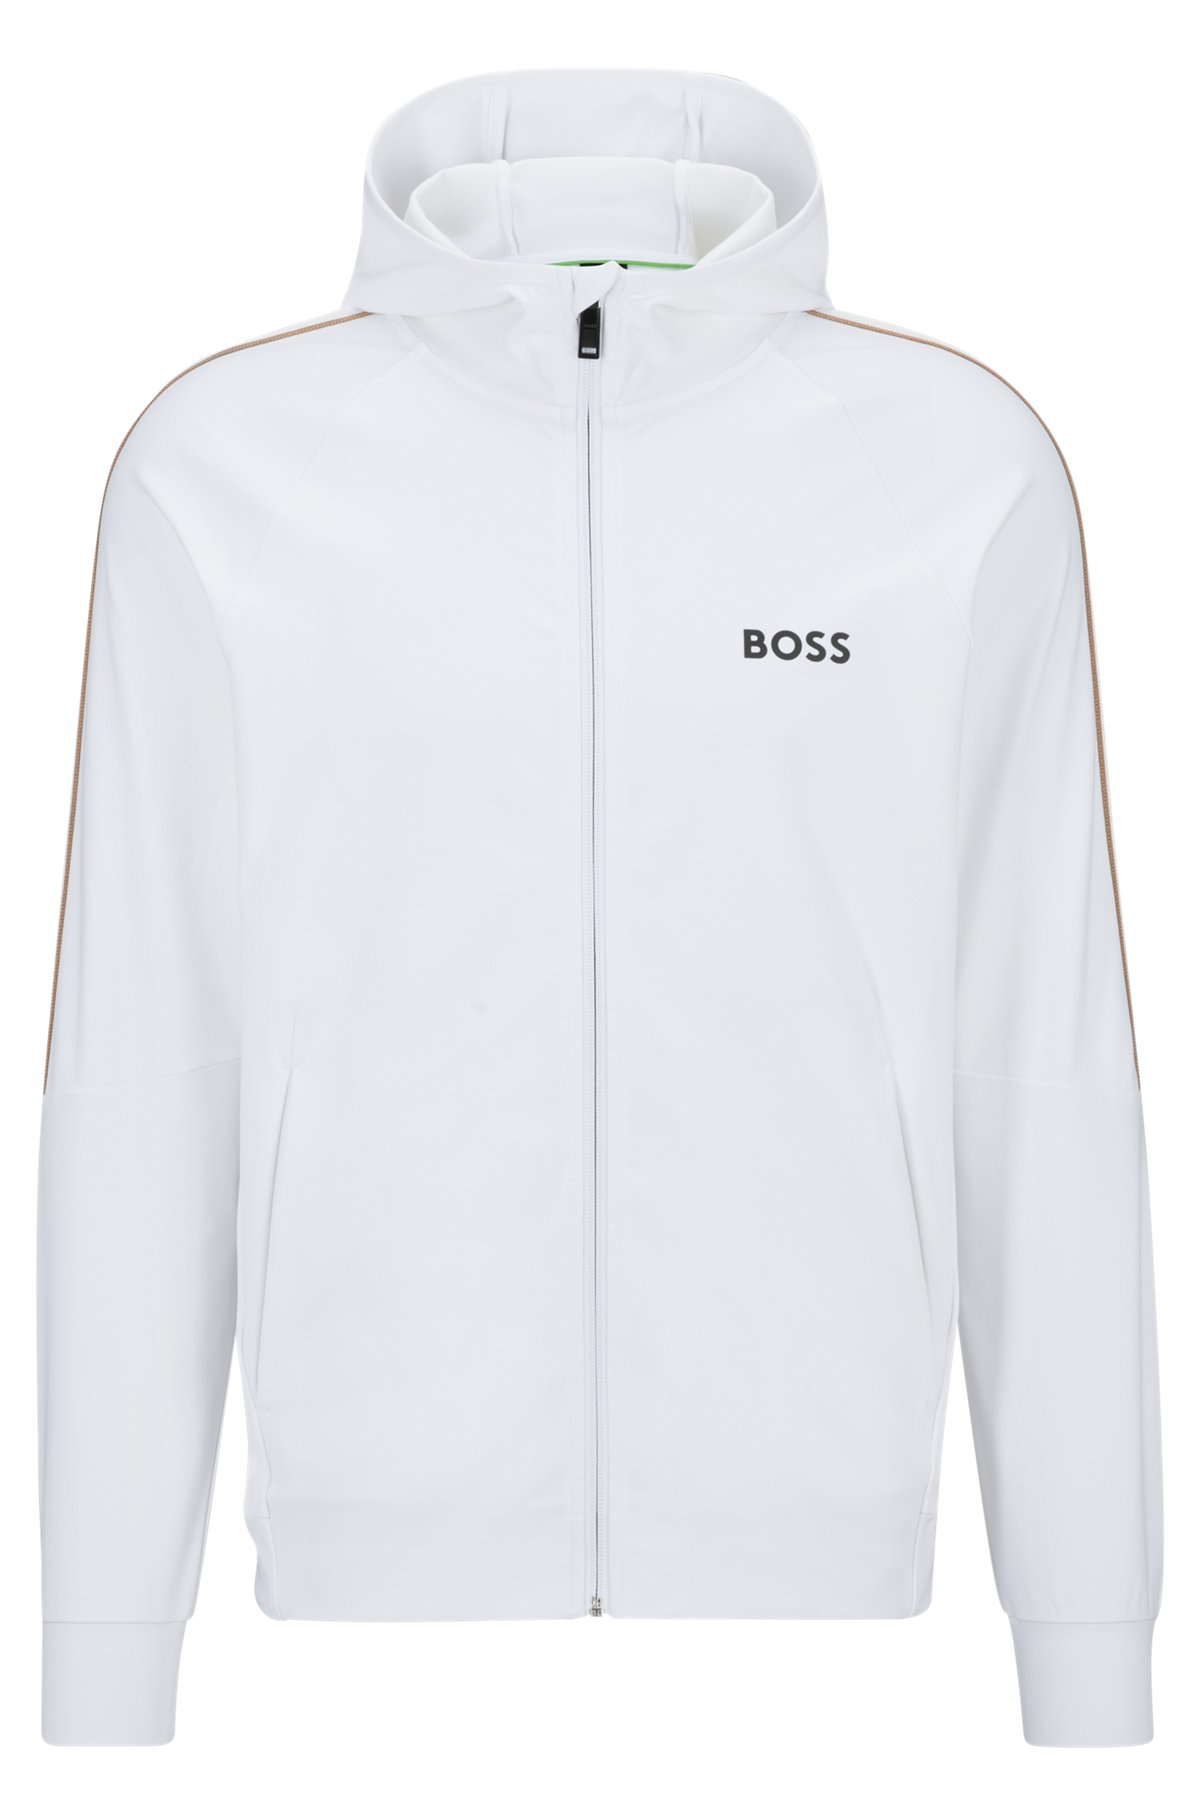 BOSS x Matteo Berrettini hoodie with logo and stripes, White